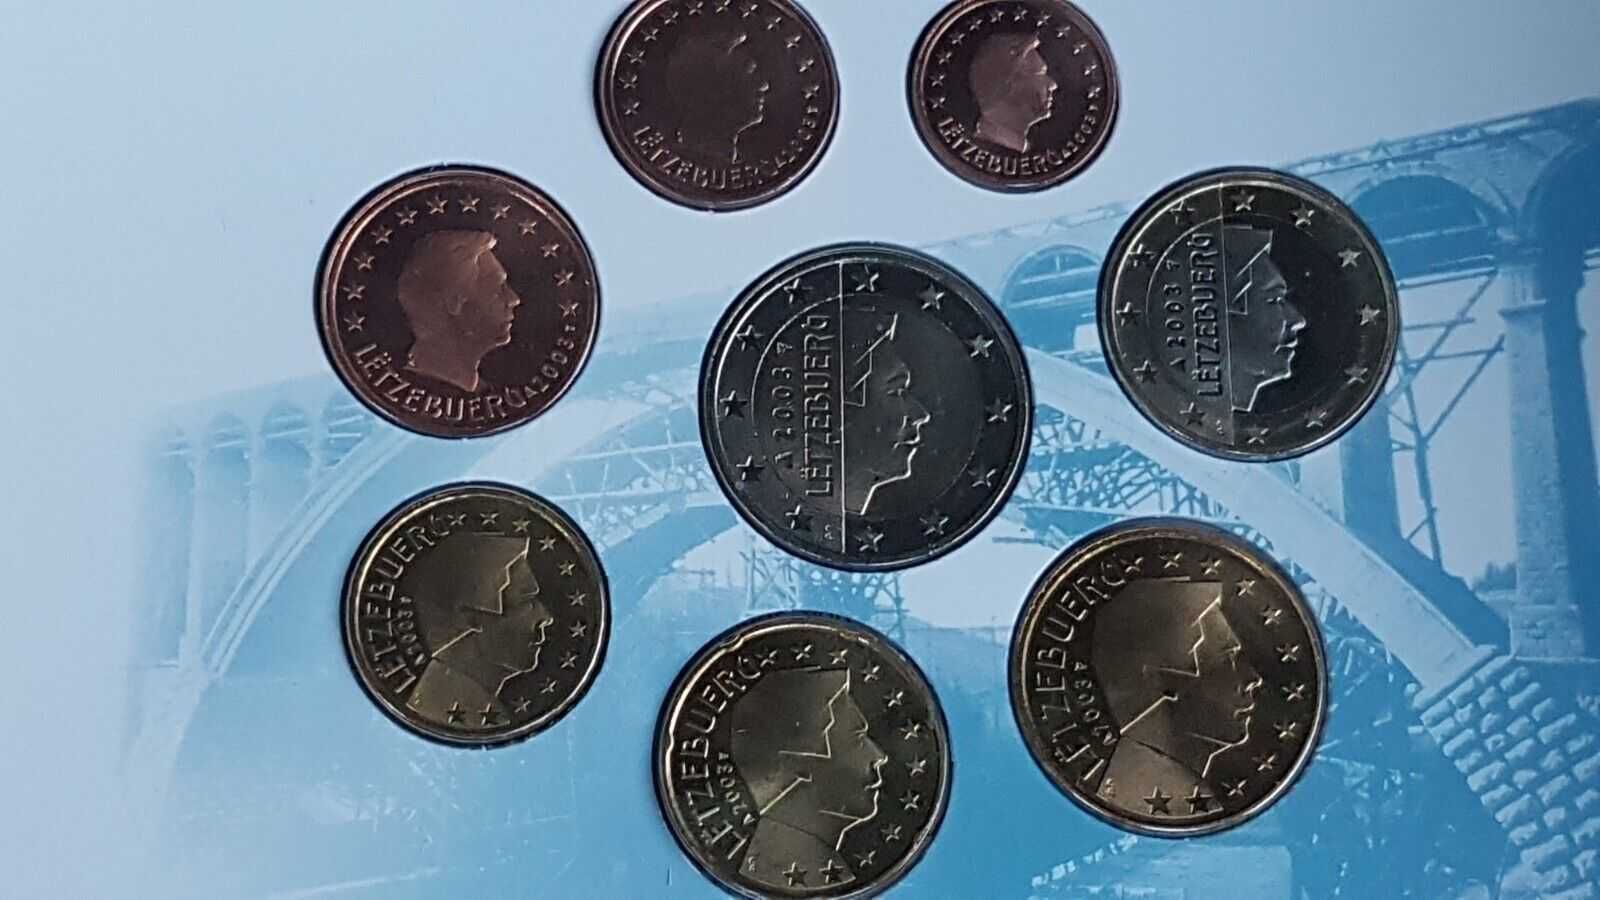 Set Conjunto Euro - Luxemburgo 2003 BNC 1ct até 2 euro